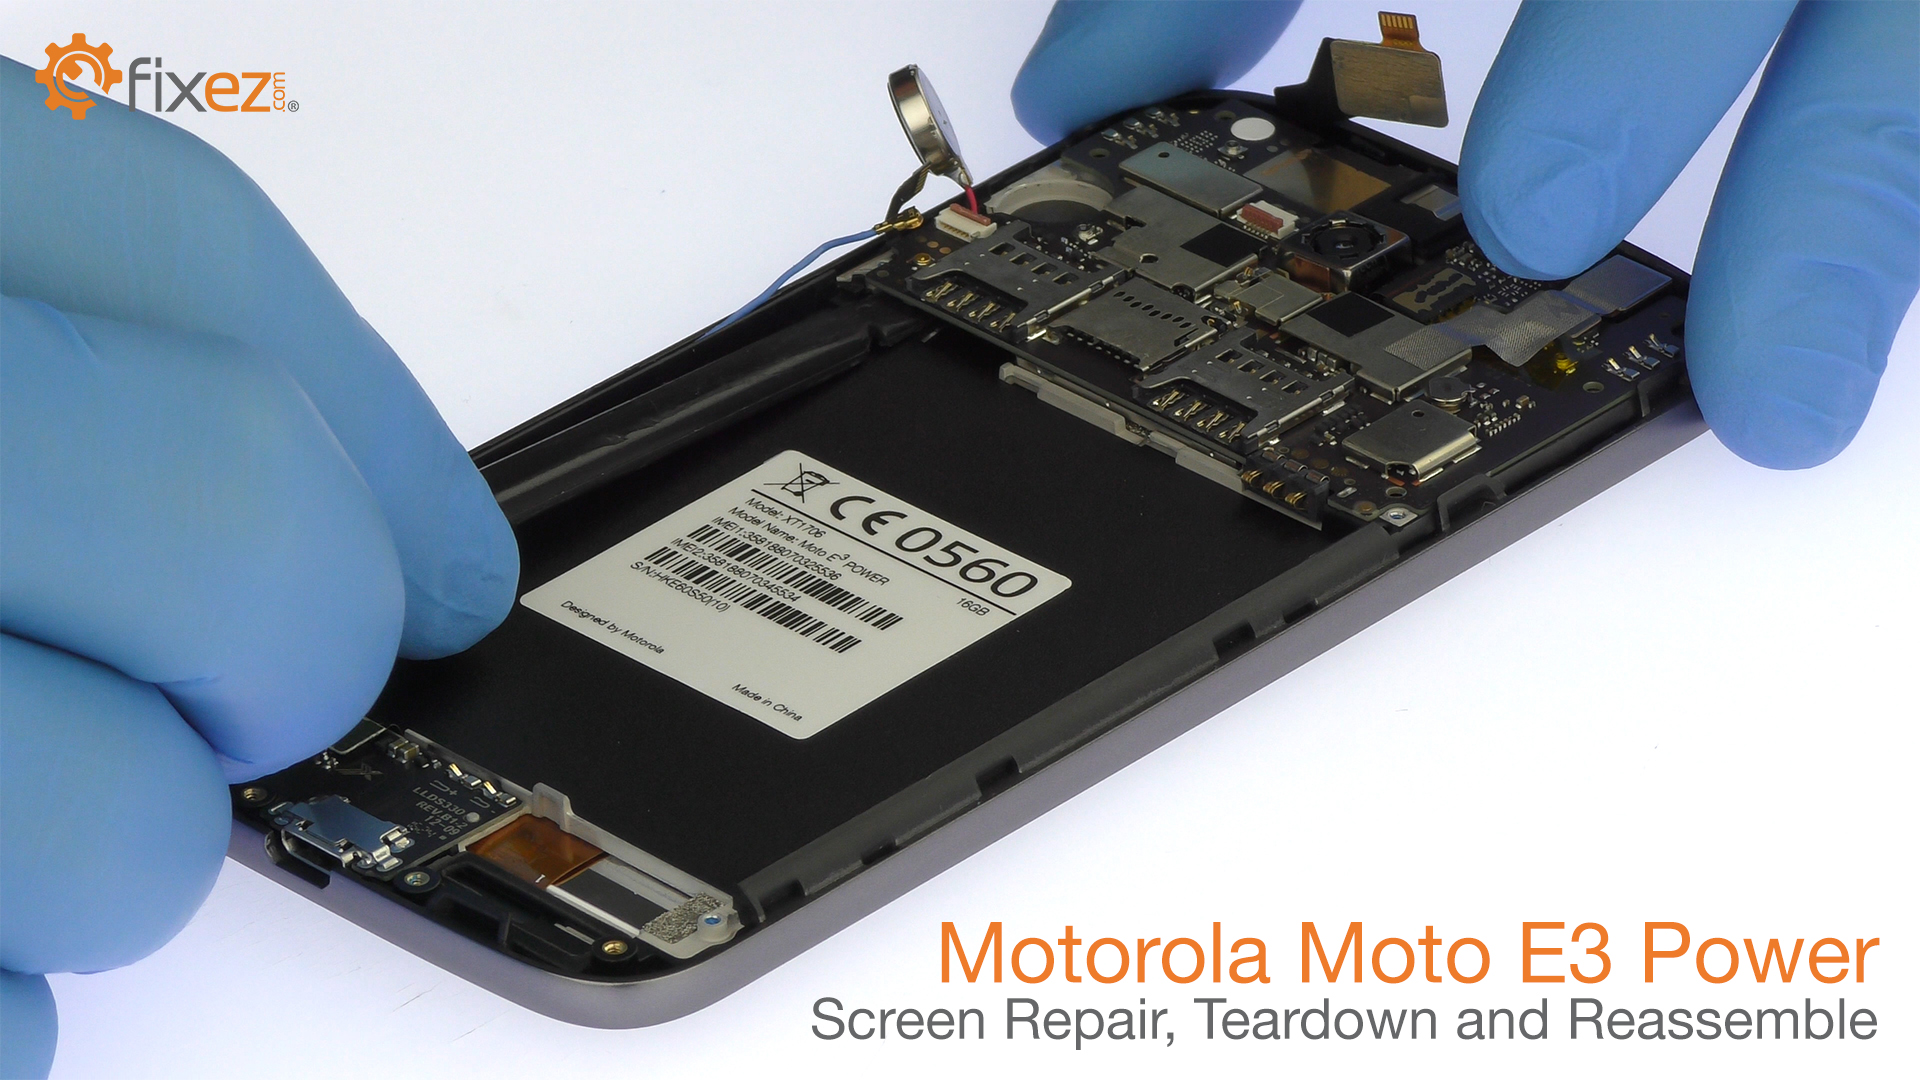 Motorola Moto E3 Power Screen Repair, Teardown and Reassemble